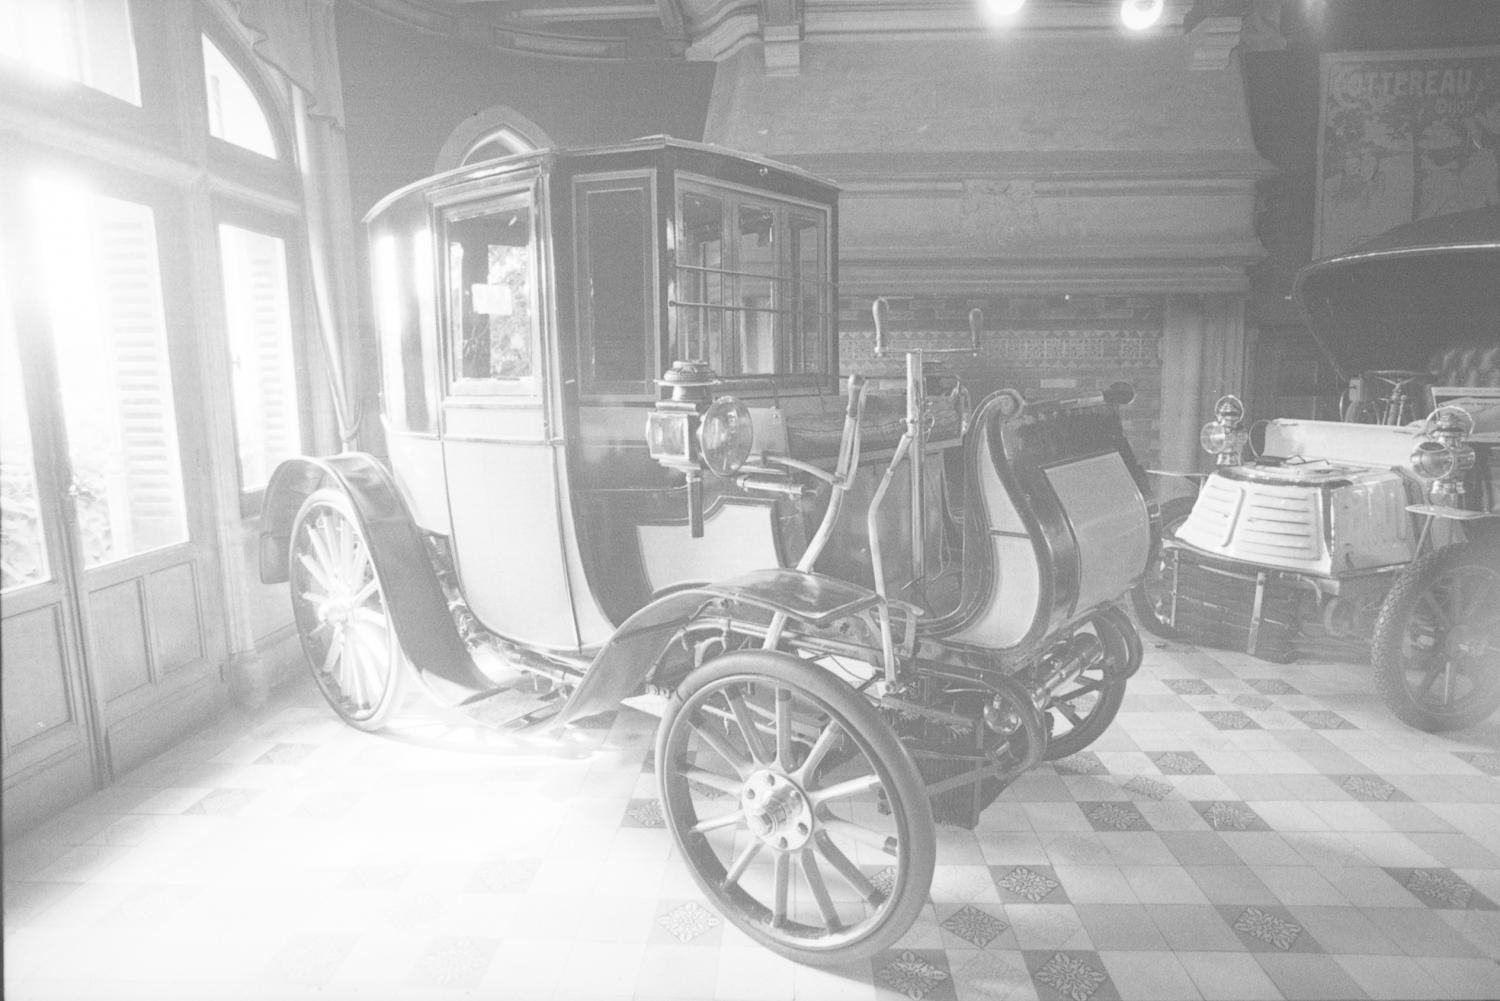 Musée de Rochetaillée : exposition de vieilles voitures